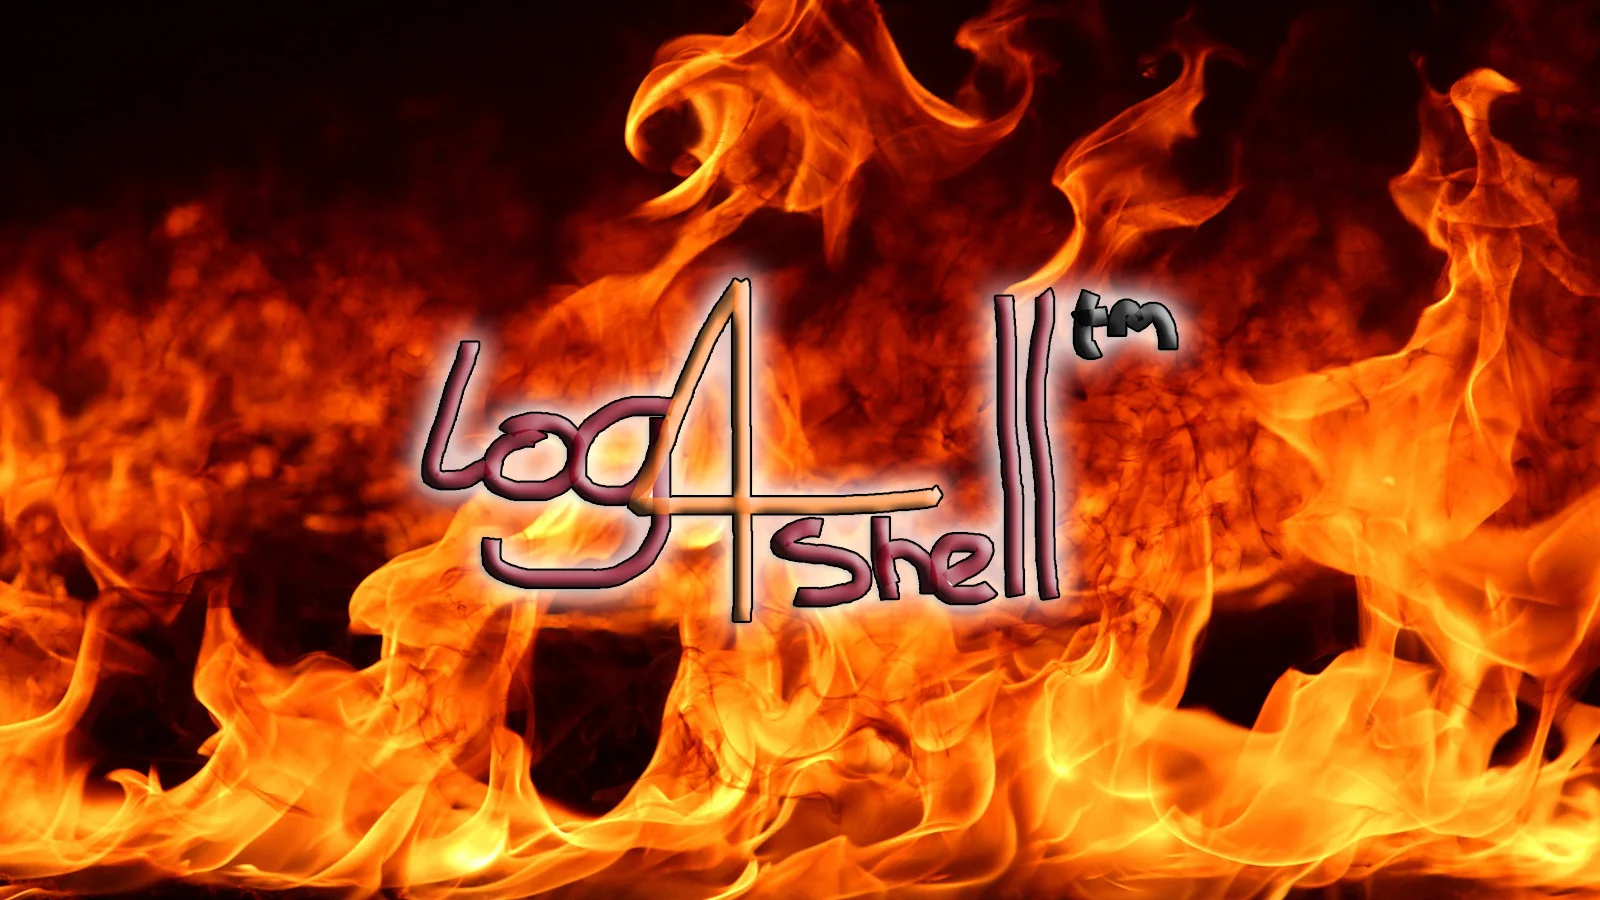 log4shell-flames-header.webp